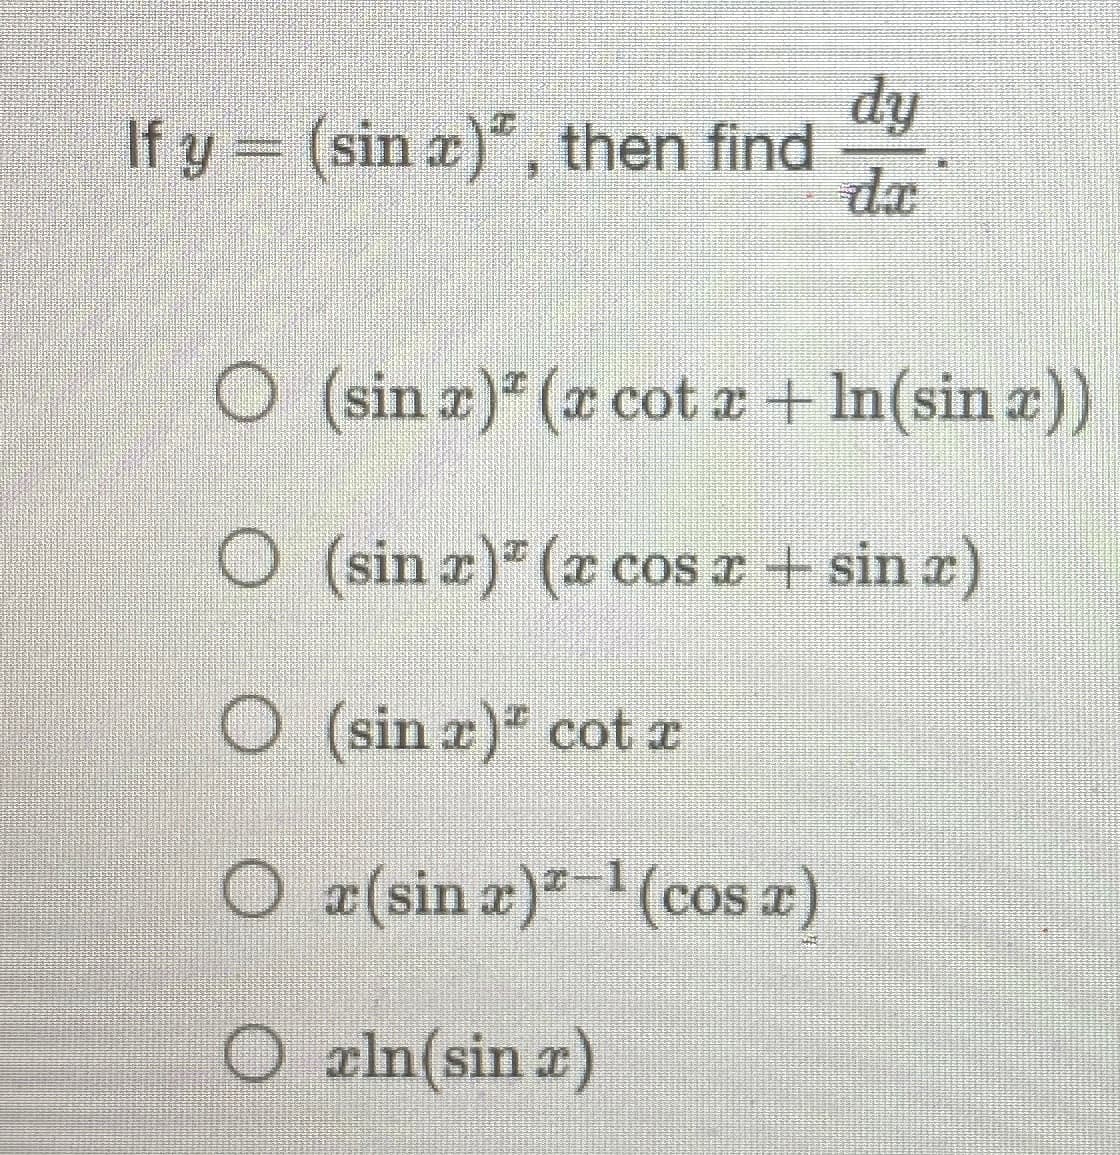 If y = (sin x)*, then find
O
dy
da
O
(sin x)ª (x cot ≈ + ln(sin x))
(sin x)ª (z cos z + sin z)
(sin x)" cot a
Ox(sin x)²-¹(cosa)
O xln(sin x)